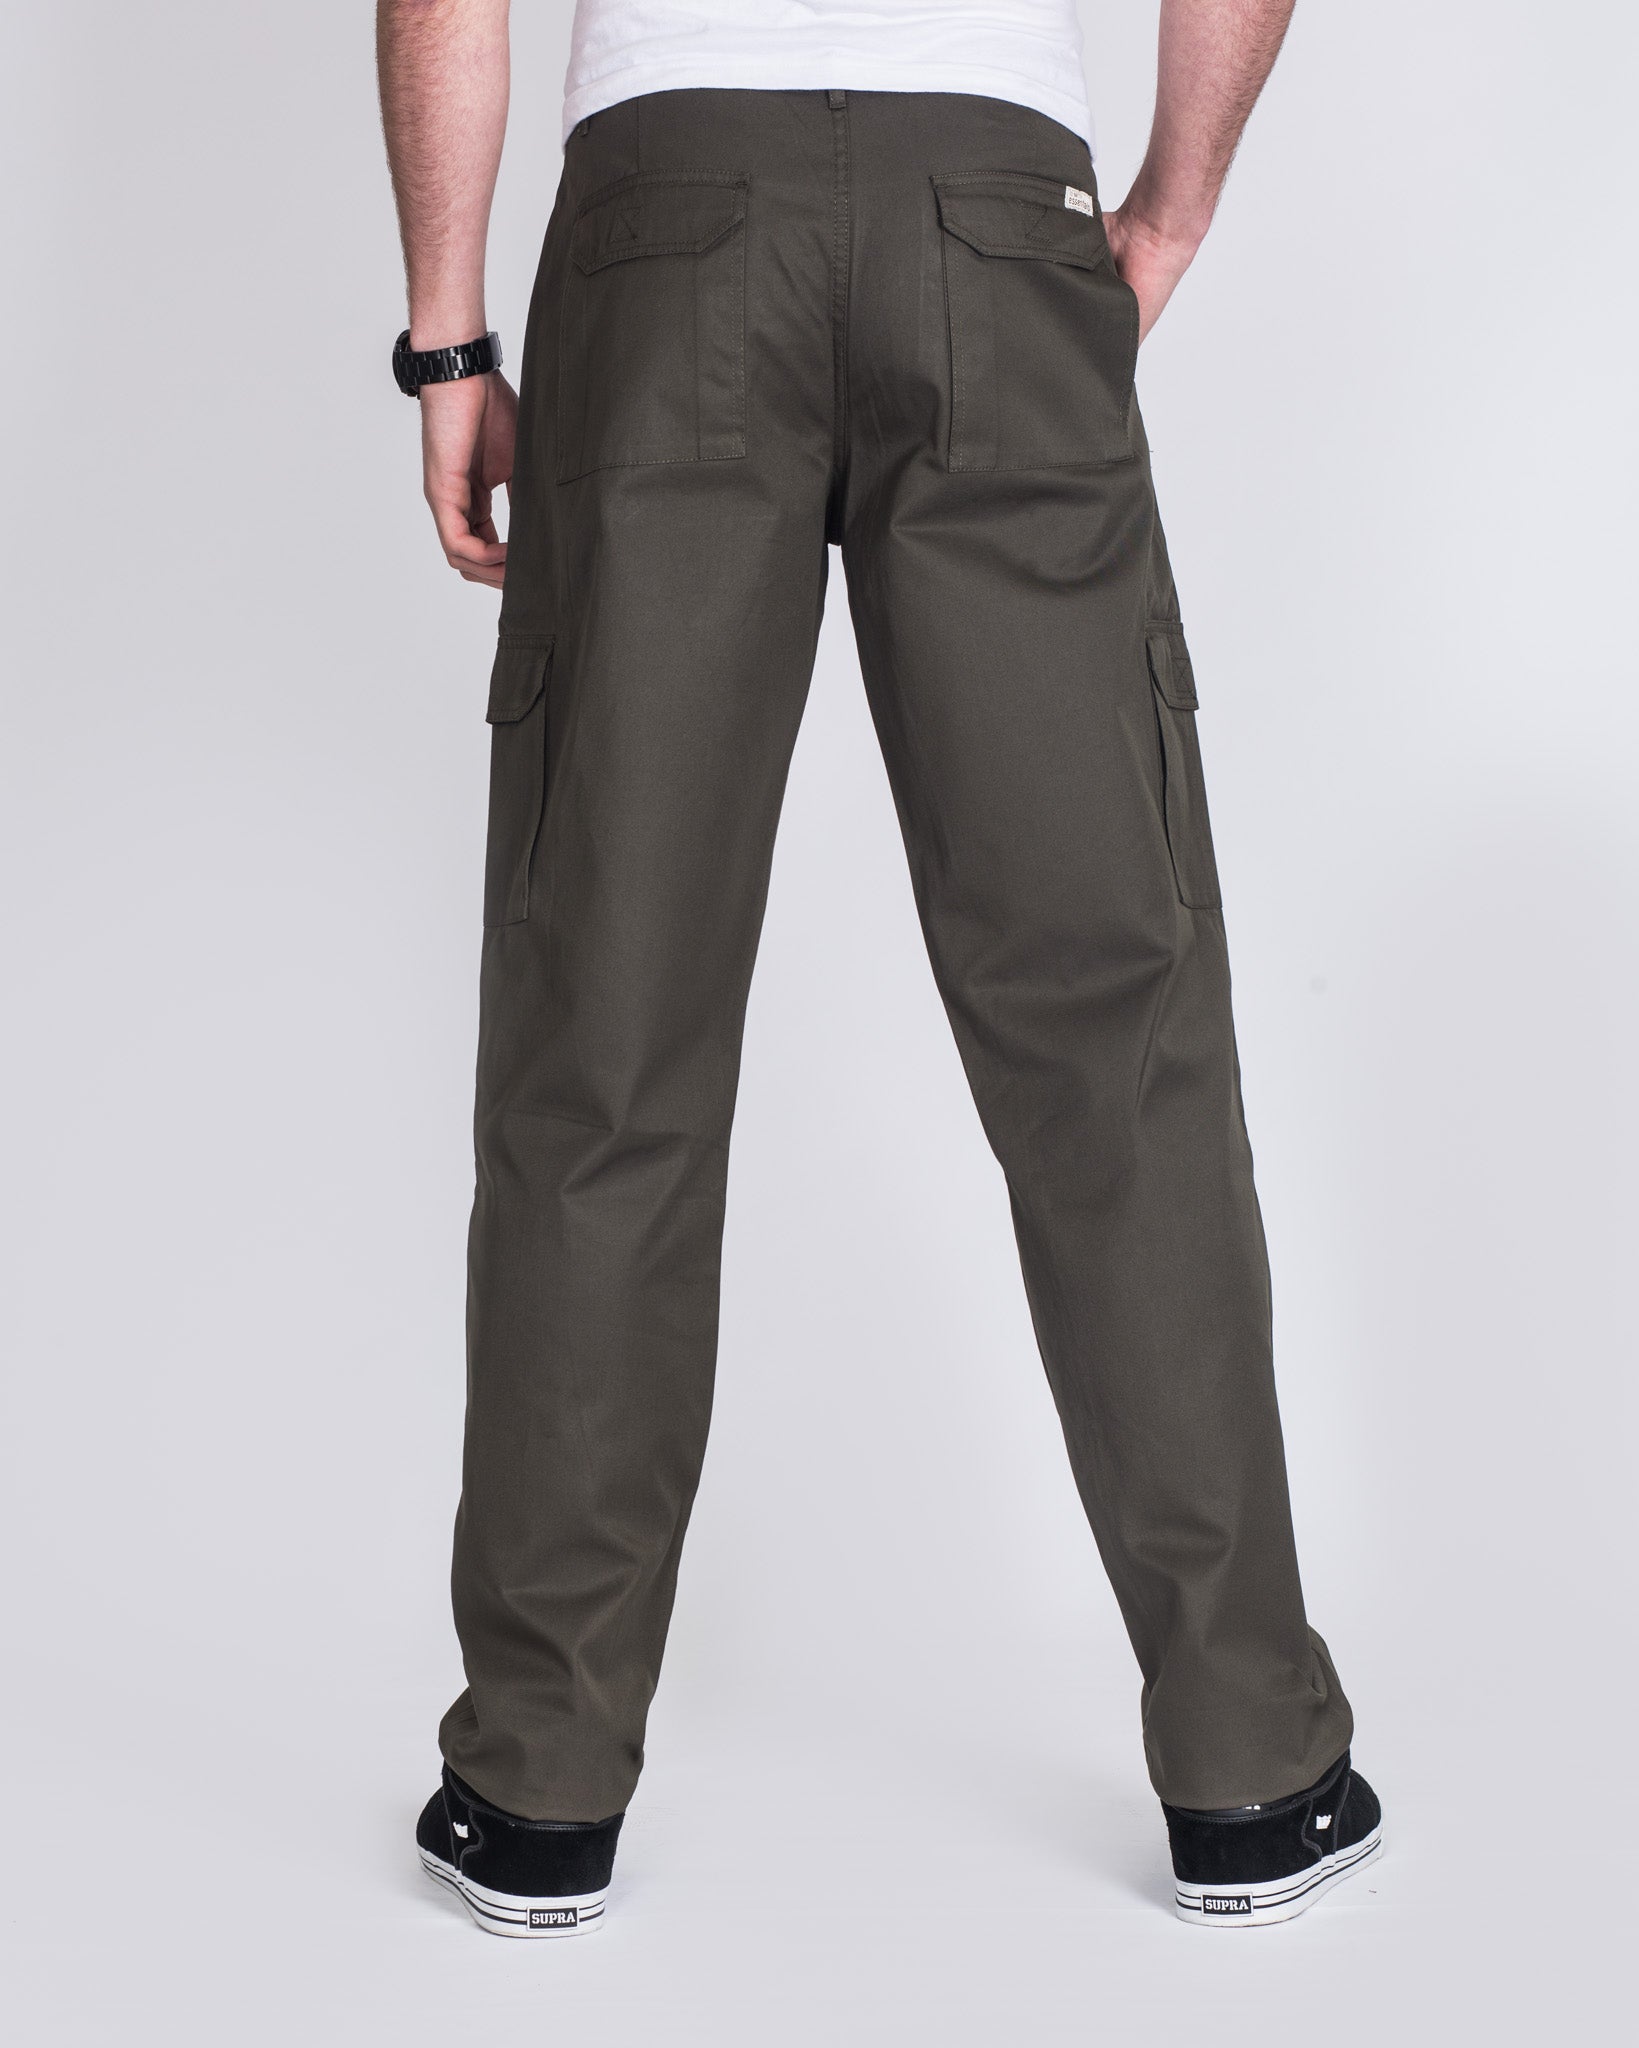 Ed Baxter Heavy Duty Tall Combat Trousers (khaki)